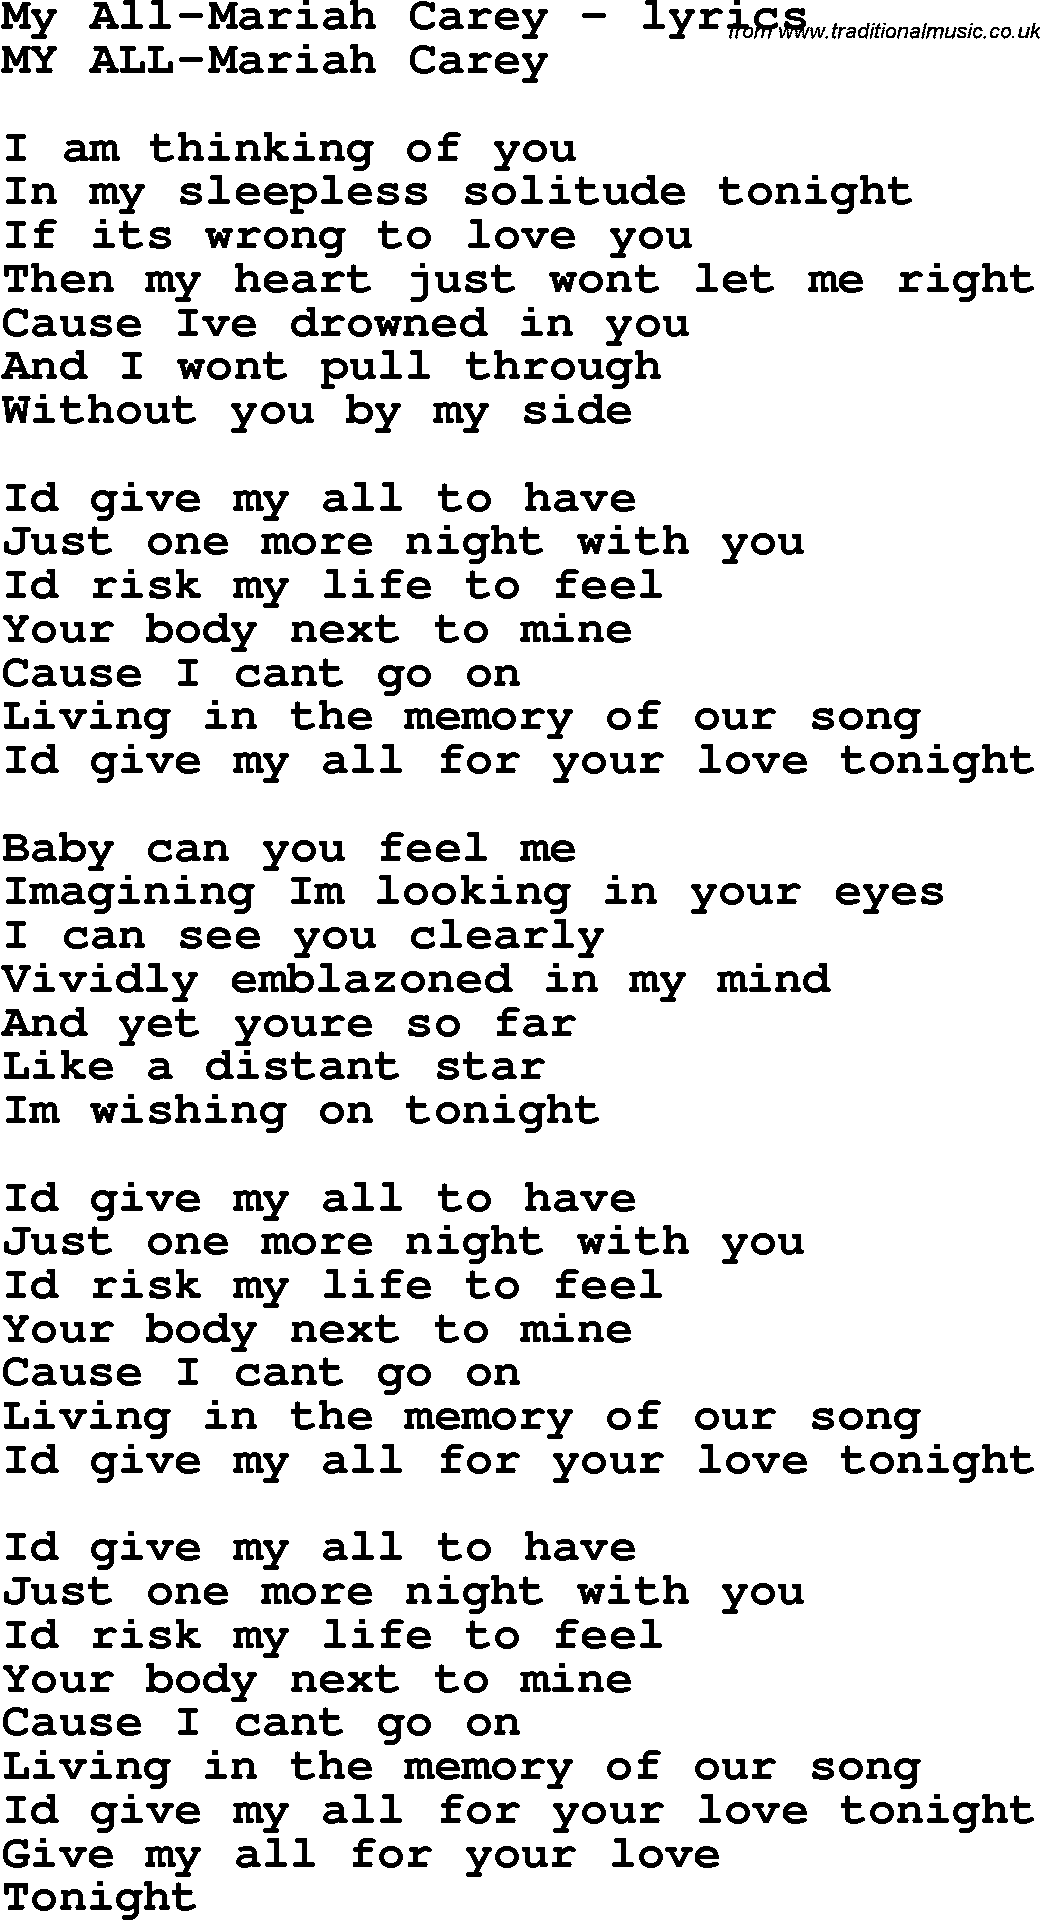 Love Song Lyrics for: My All-Mariah Carey